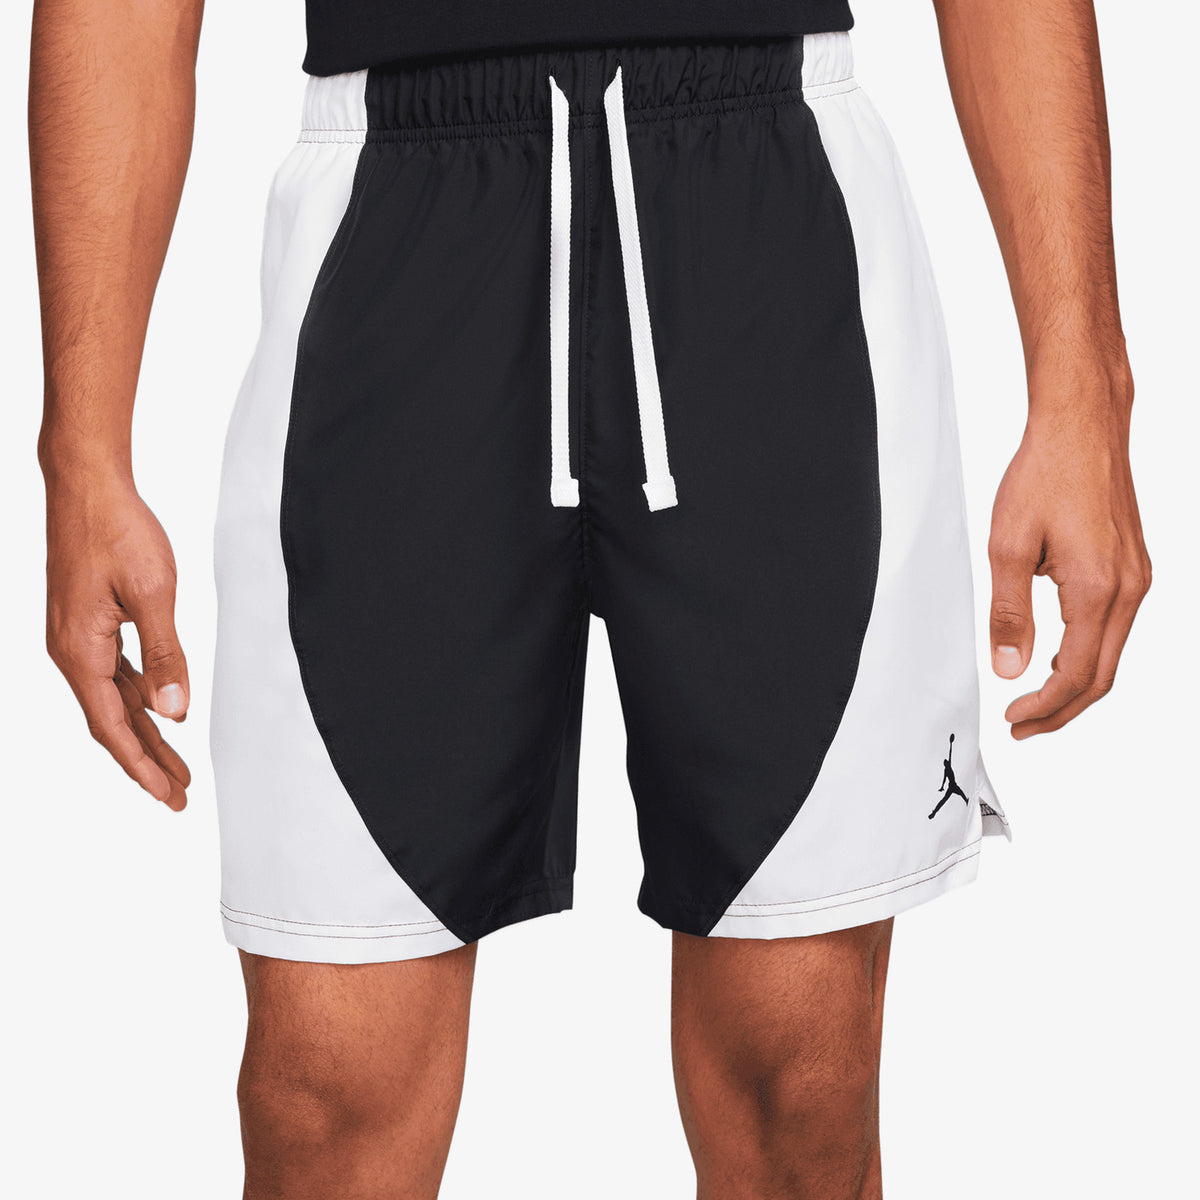 Jordan Sport Dri-FIT Air Shorts - Black